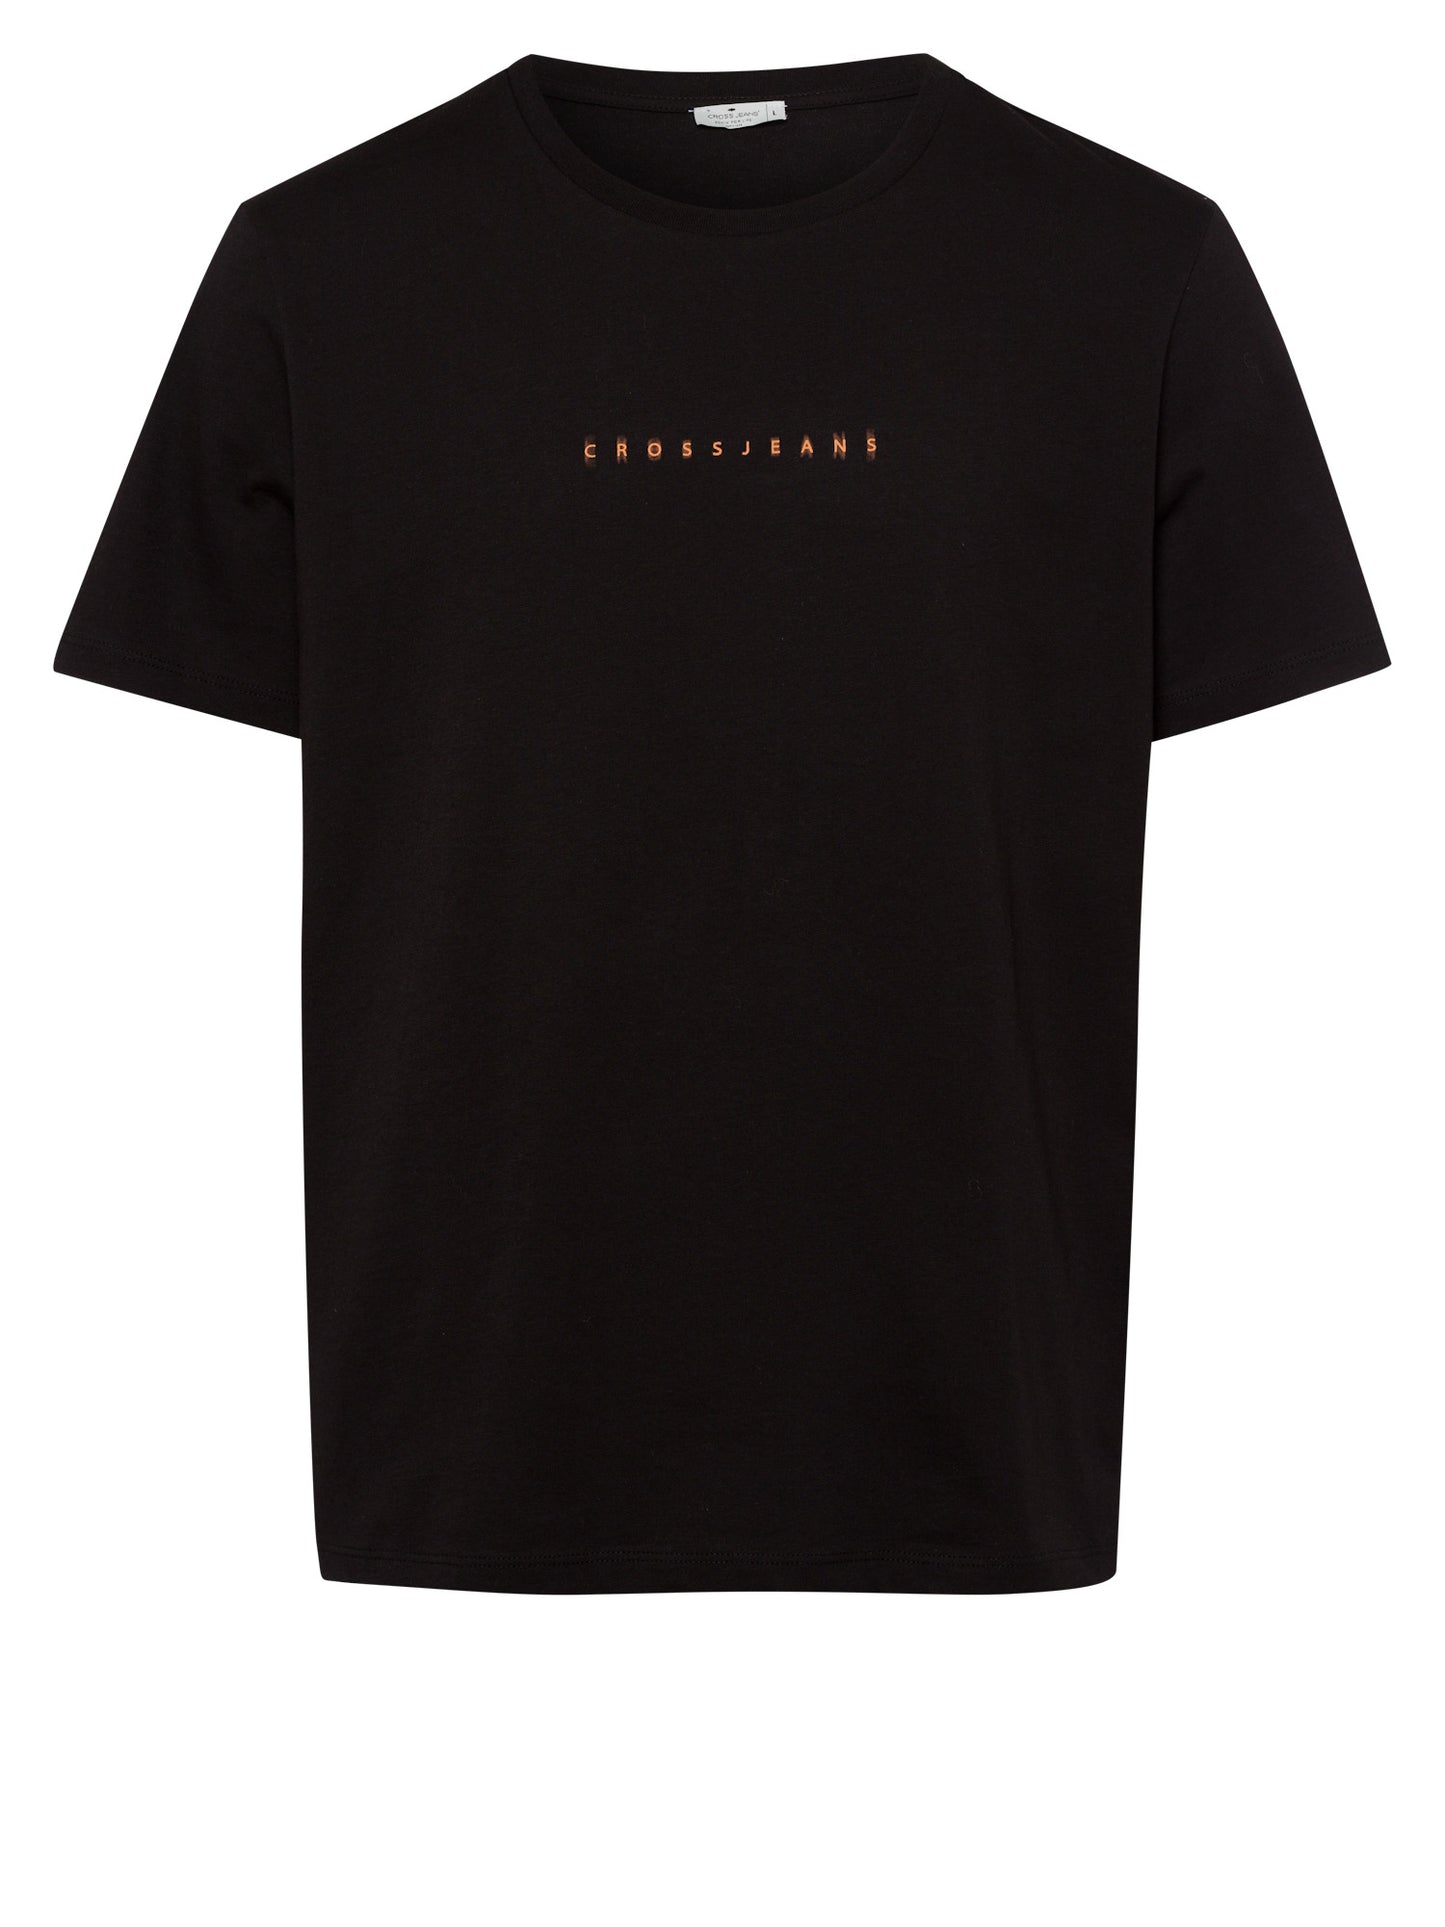 Herren Regular T-Shirt mit Rückenprint schwarz